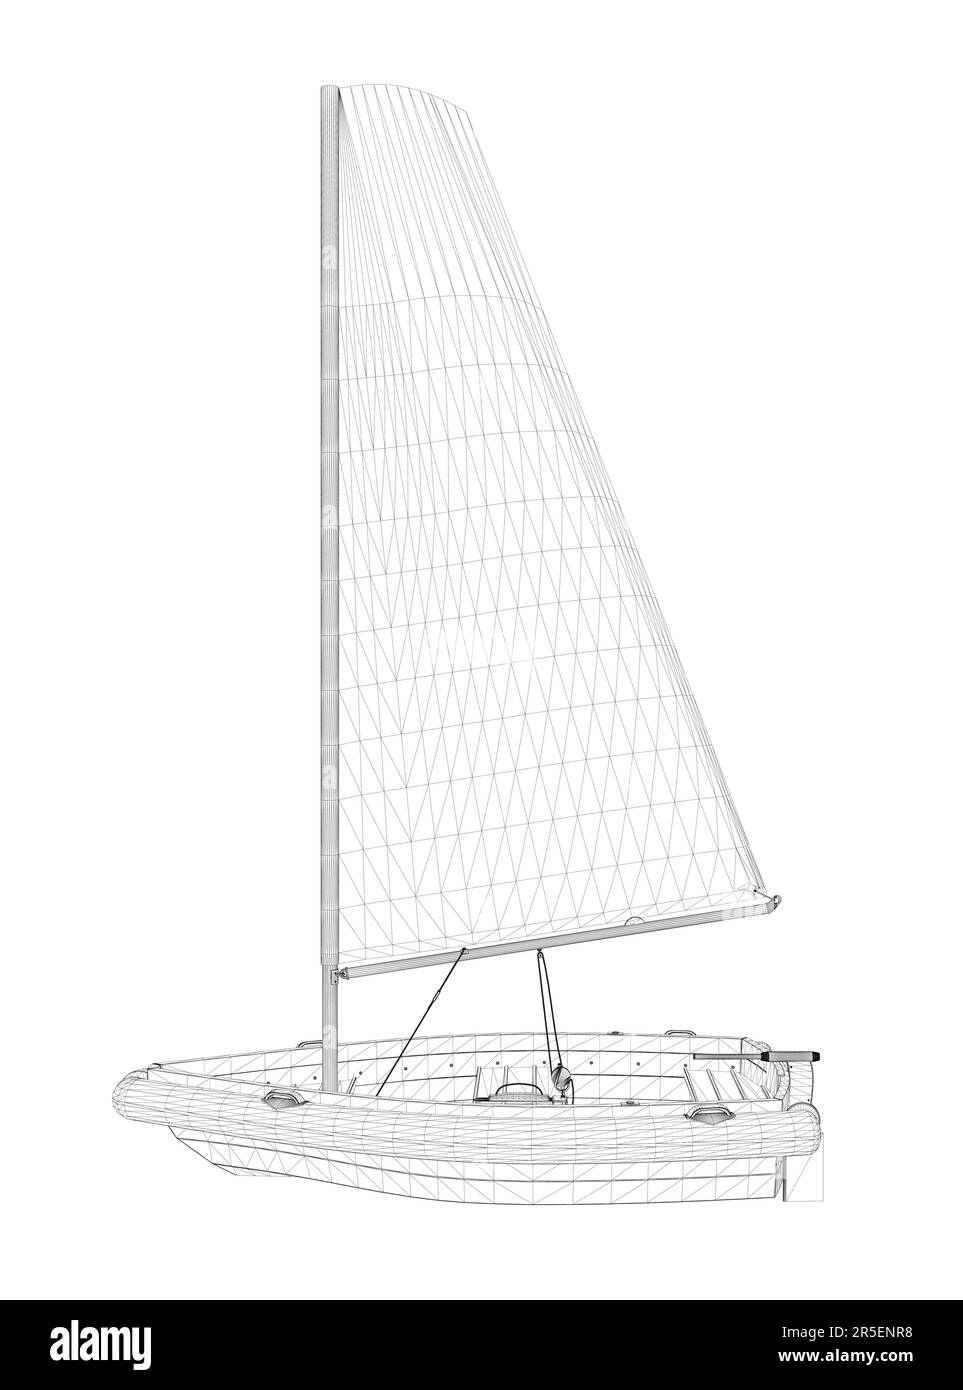 Estructura Alámbrica De Un Pequeño Barco Con Una Vela Hecha De Líneas Negras Aisladas Sobre Un 1846